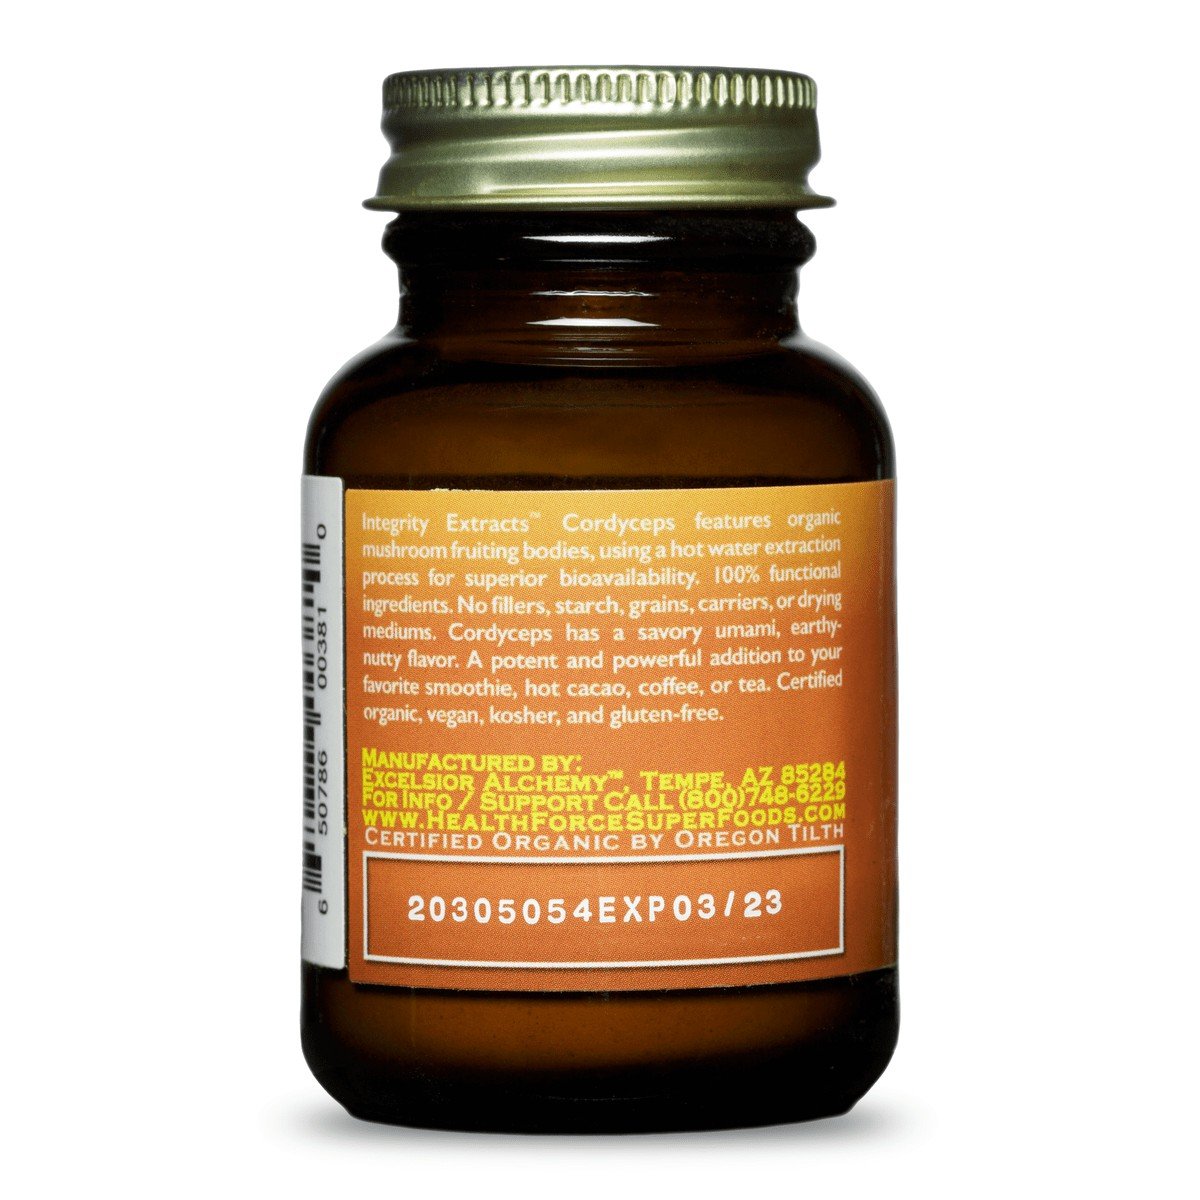 HealthForce Superfoods Integrity Extracts Cordyceps 10g Powder